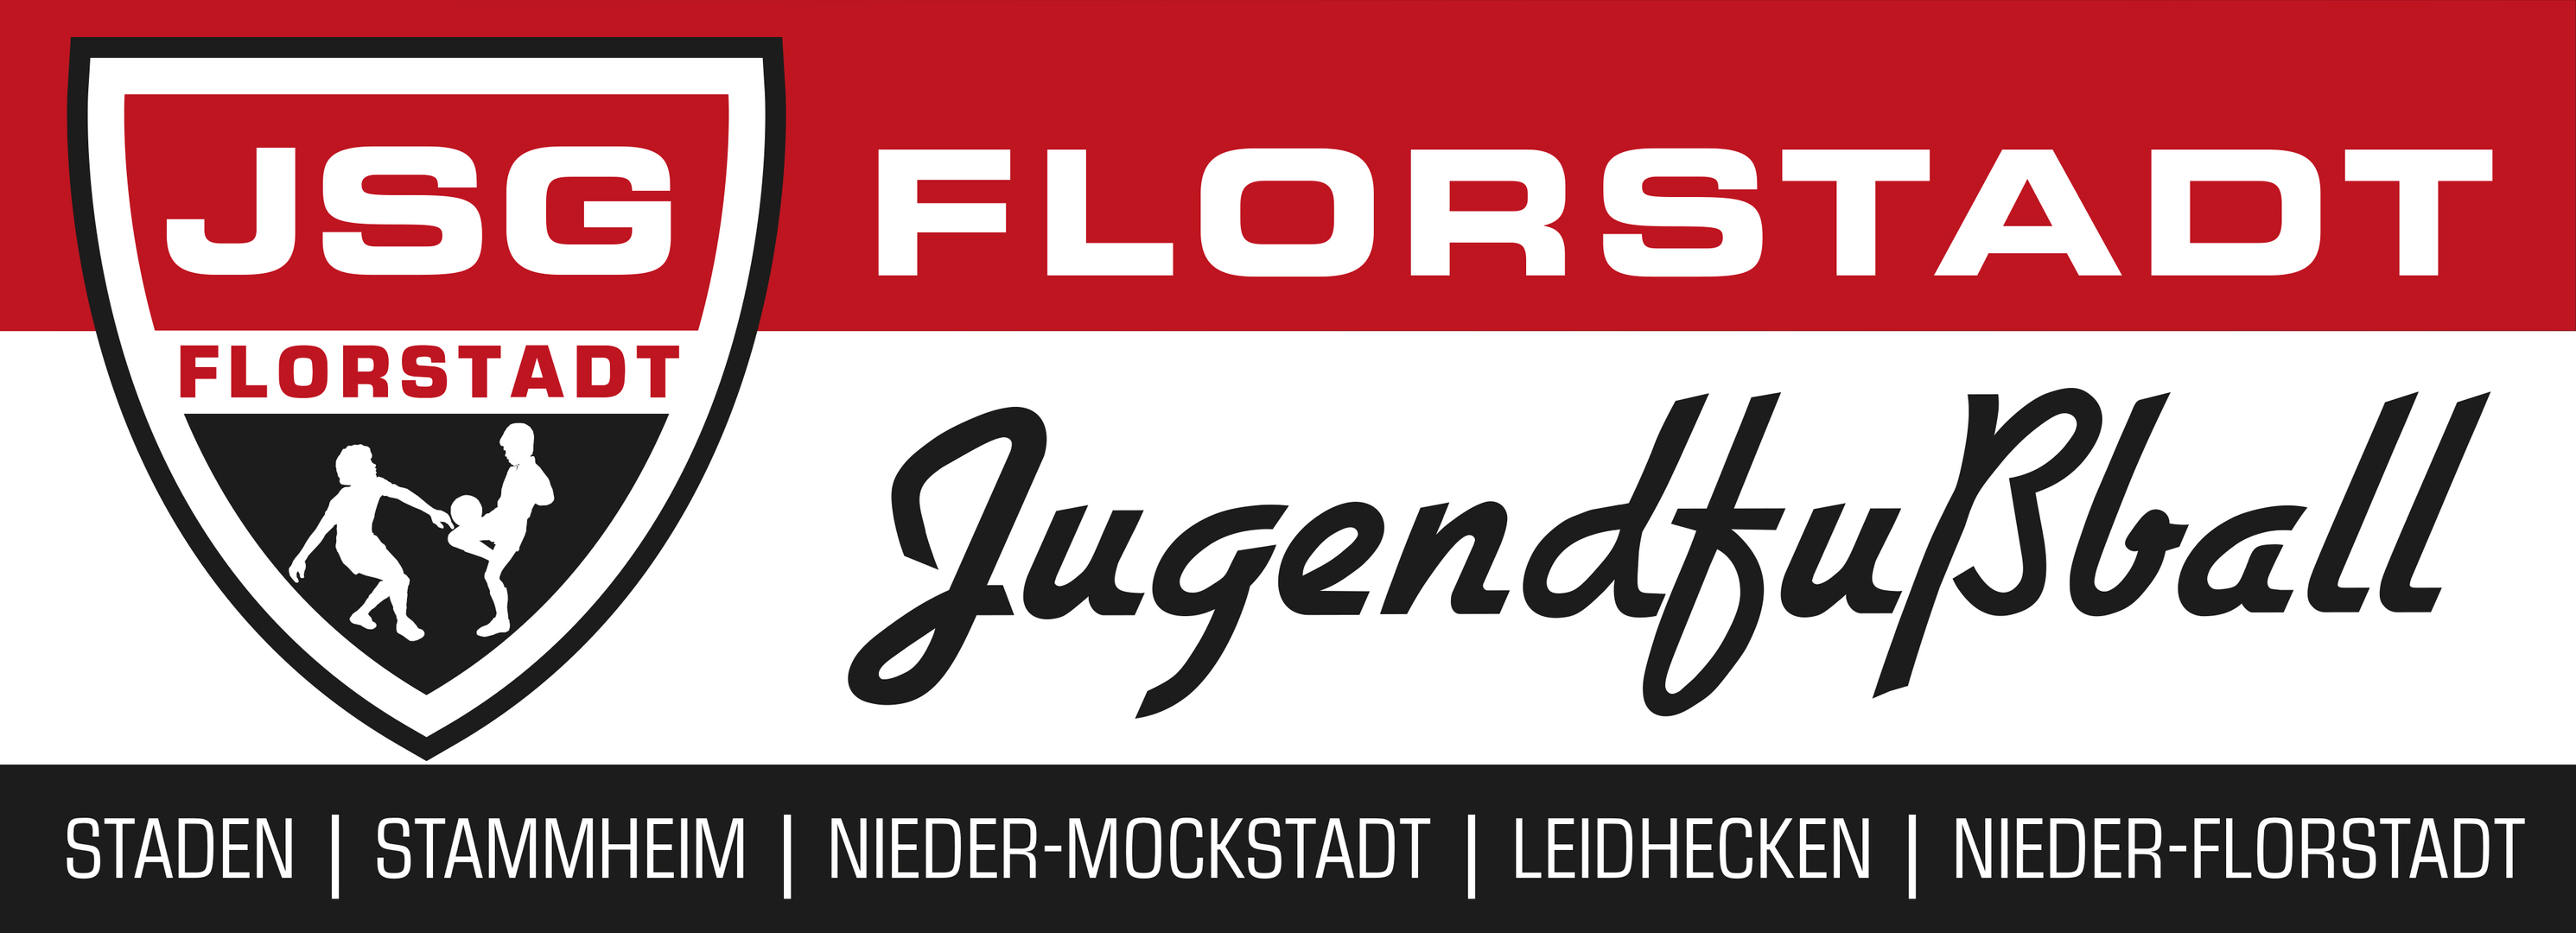 JSG Florstadt in Bildern | JSG Florstadt